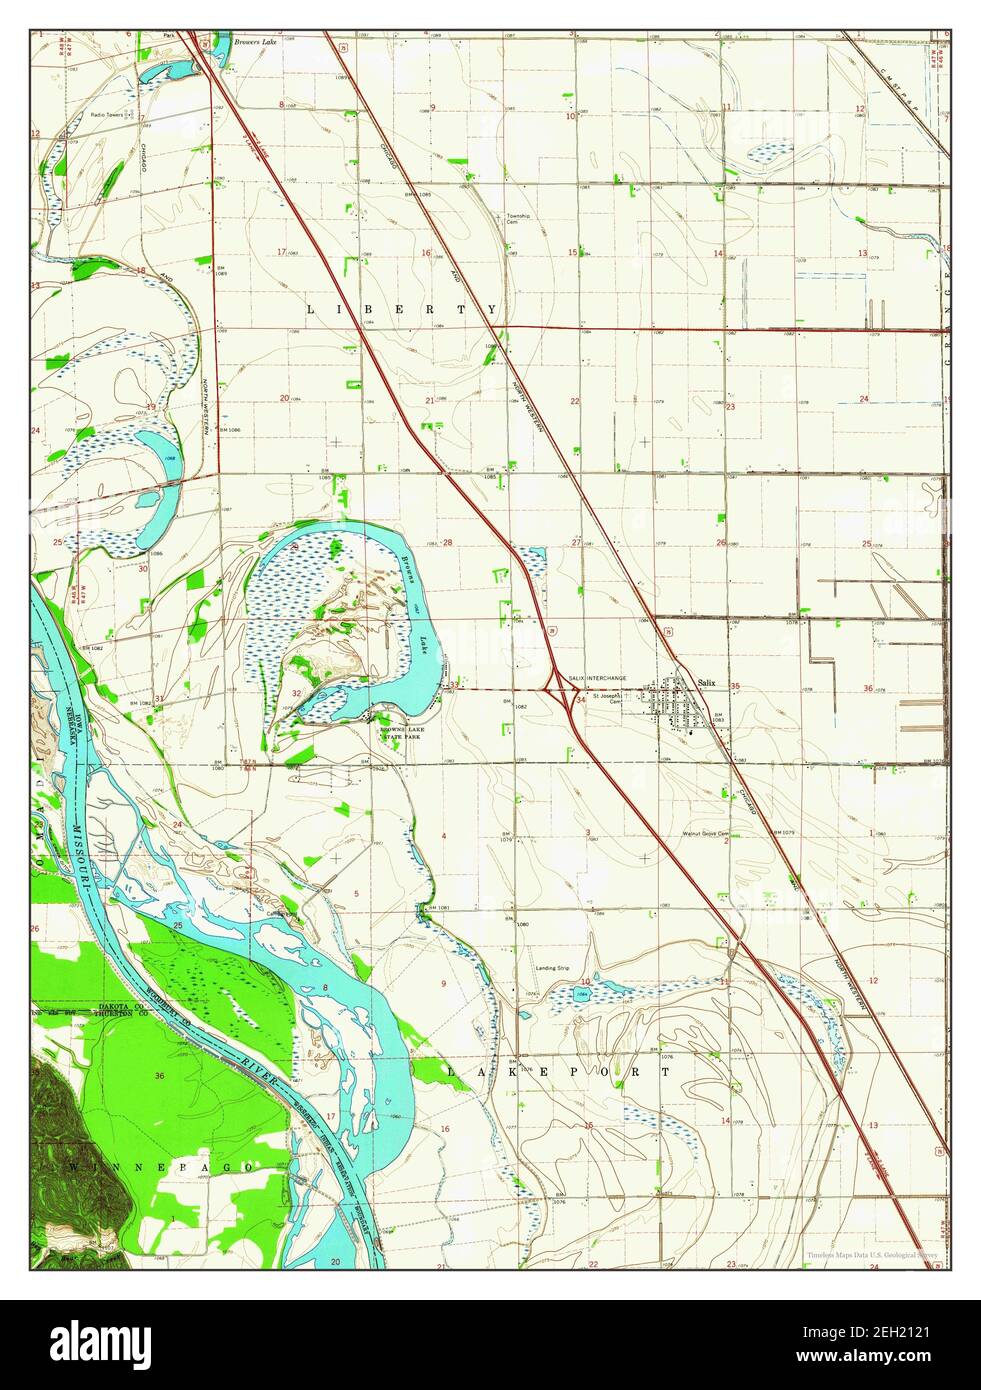 Salix, Iowa, map 1964, 1:24000, United States of America by Timeless Maps, data U.S. Geological Survey Stock Photo